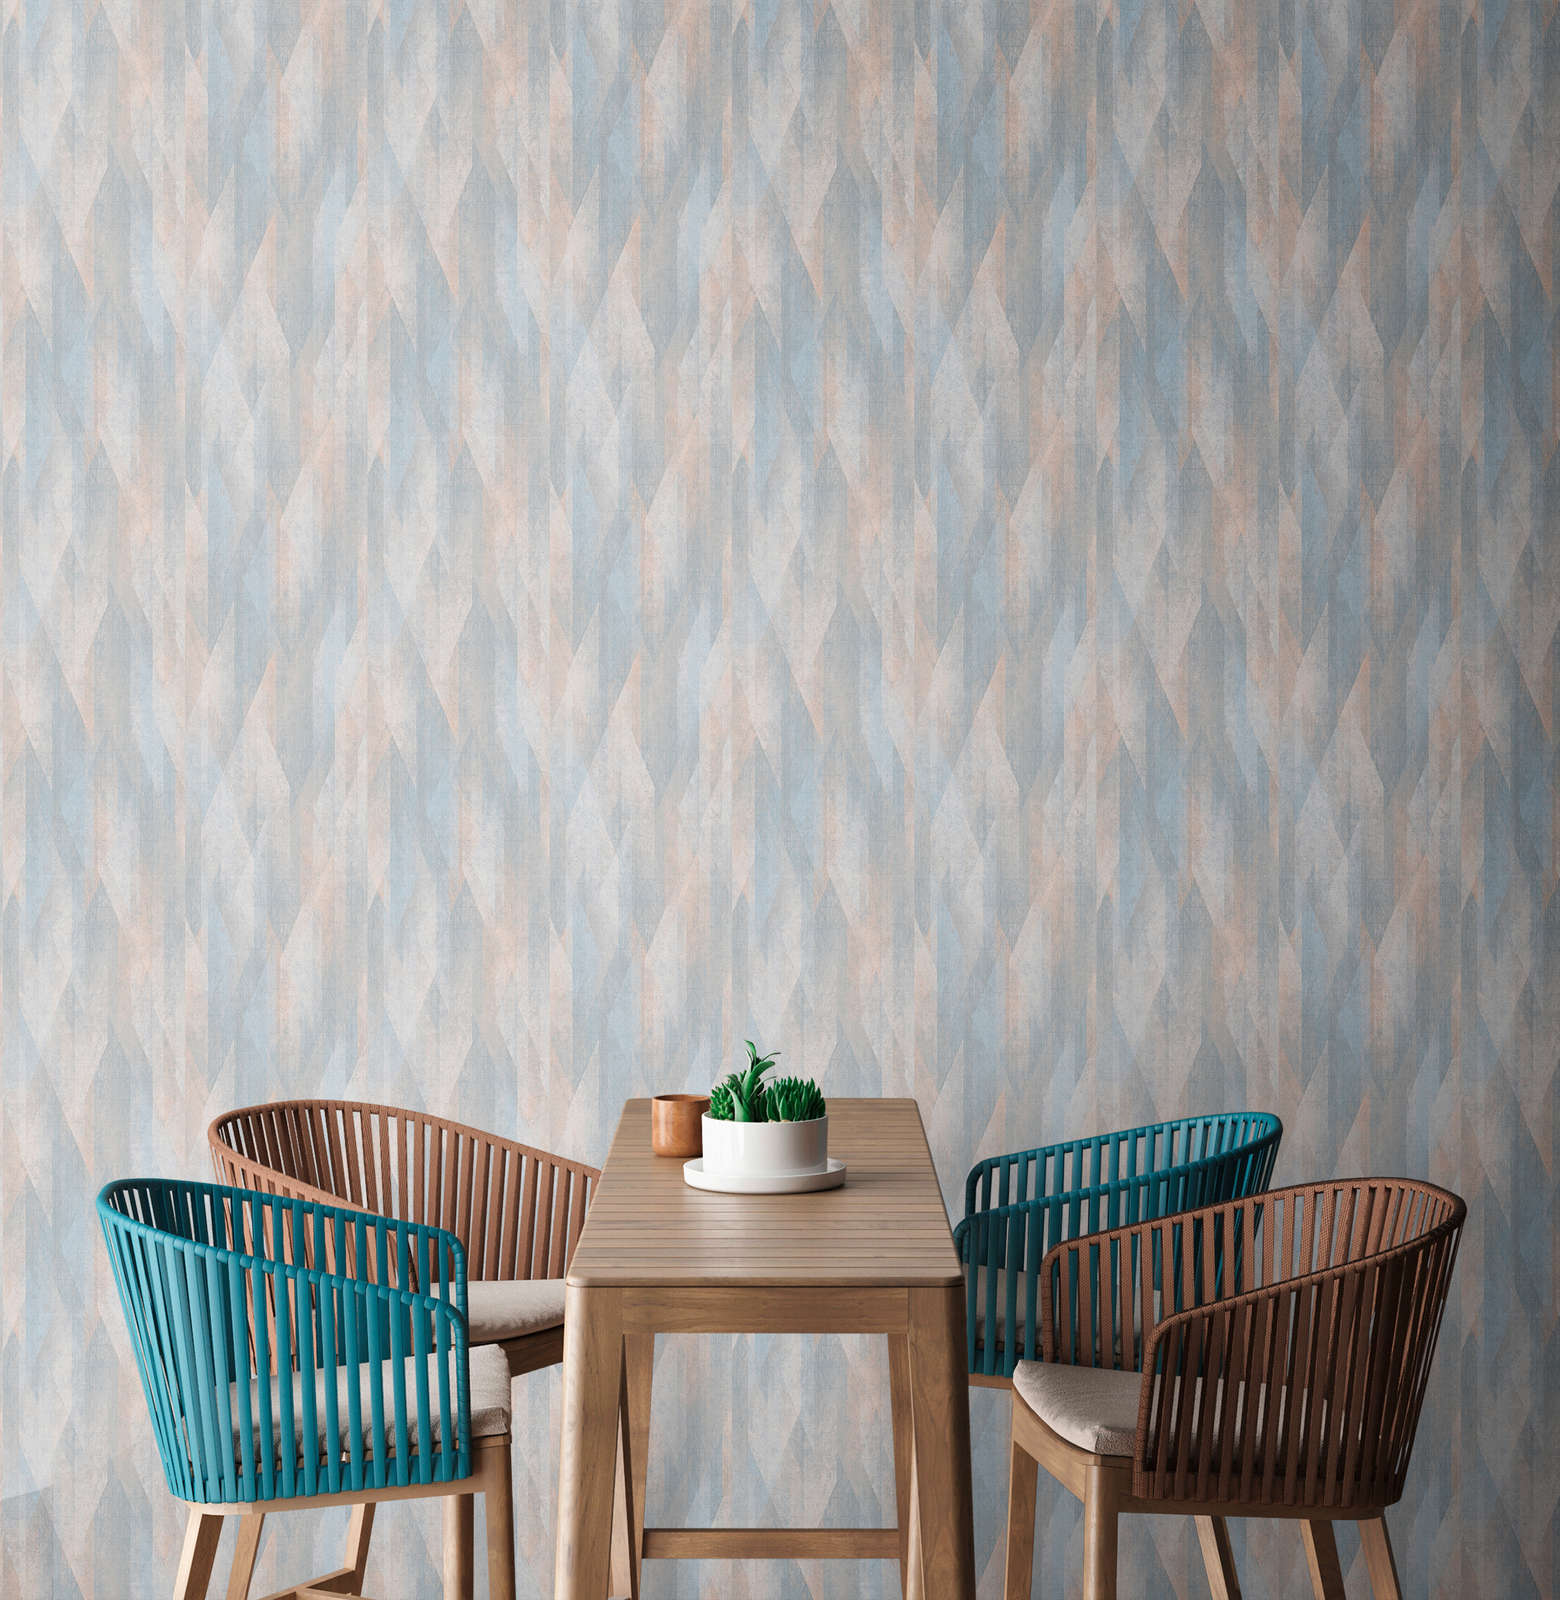             Vintage diamond pattern non-woven wallpaper - blue, beige
        